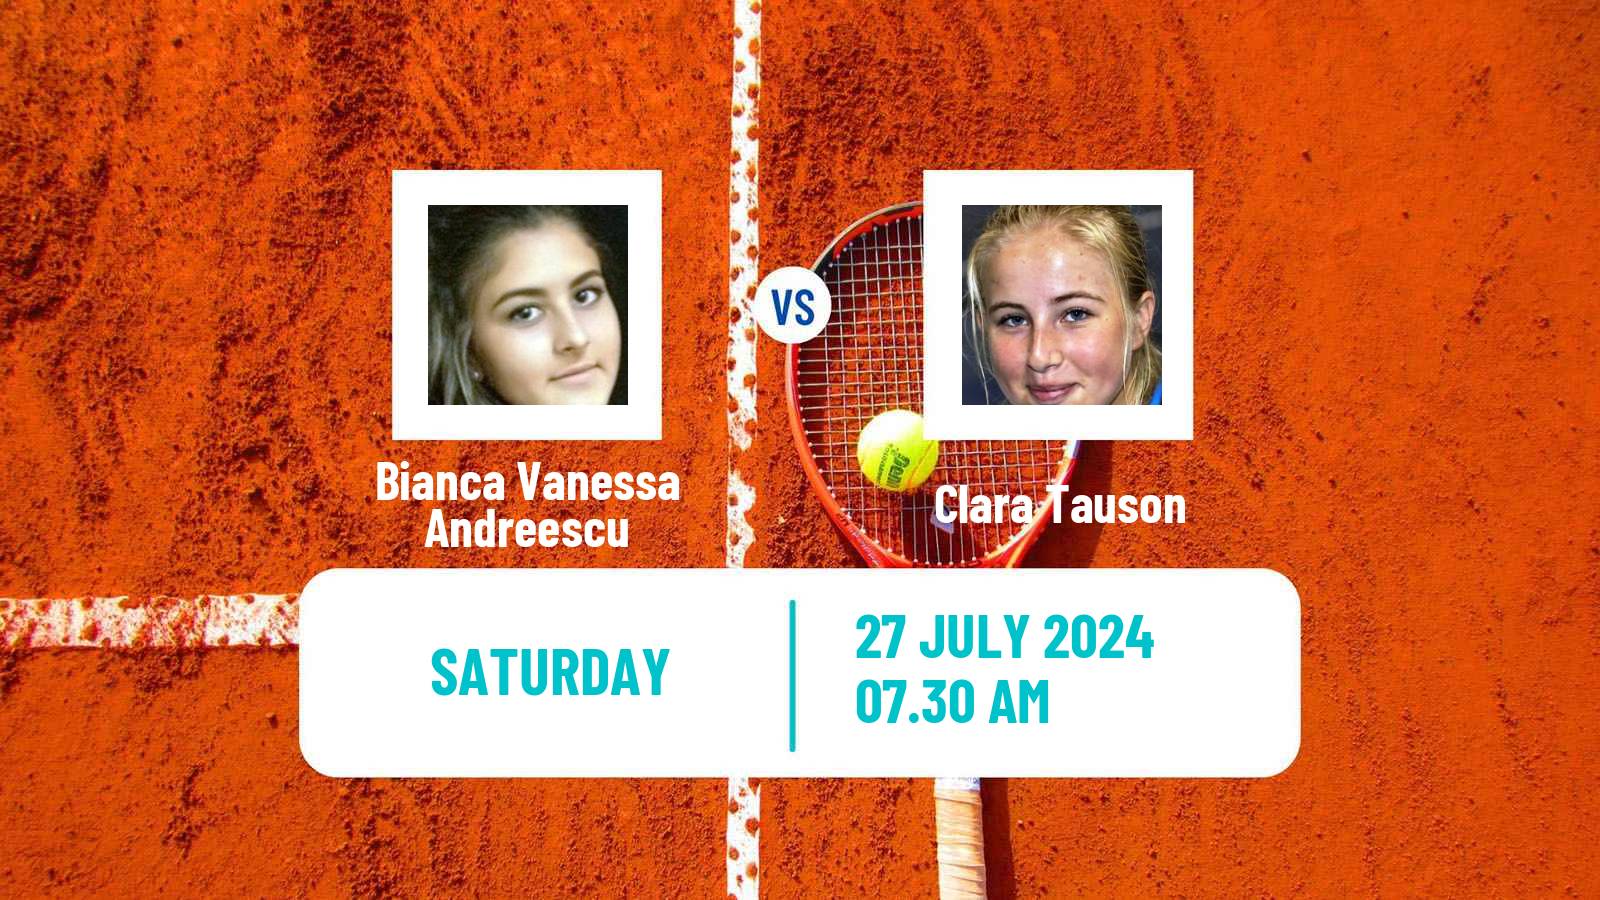 Tennis WTA Olympic Games Bianca Vanessa Andreescu - Clara Tauson